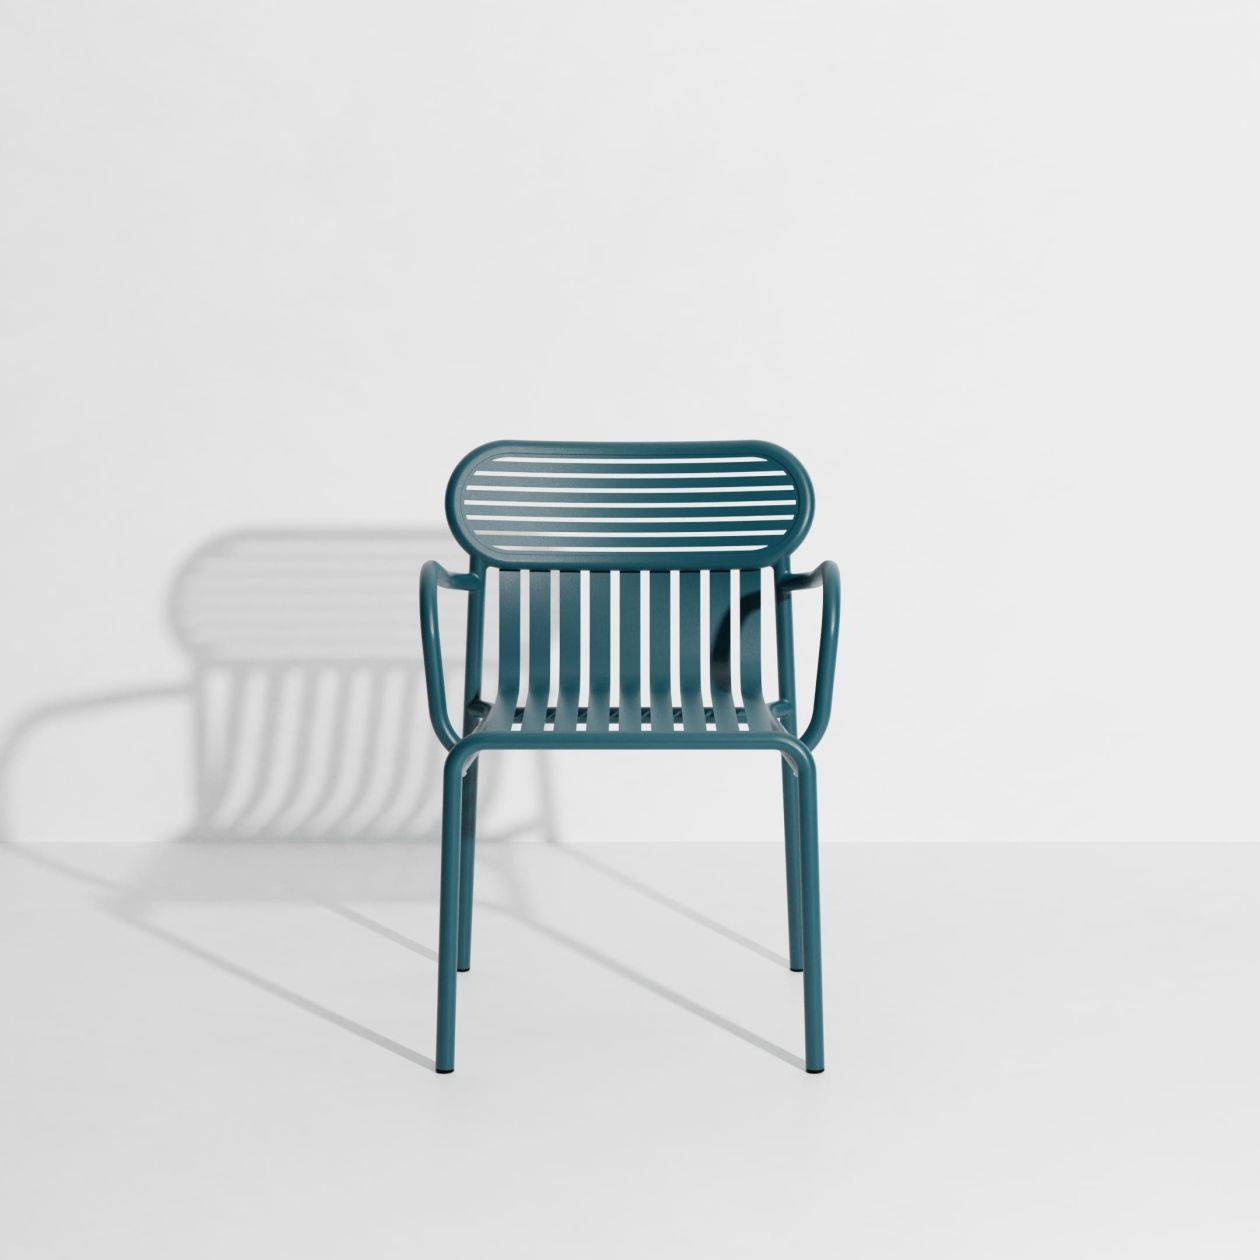 Week-End Garden Chair with armrests - Ocean blue